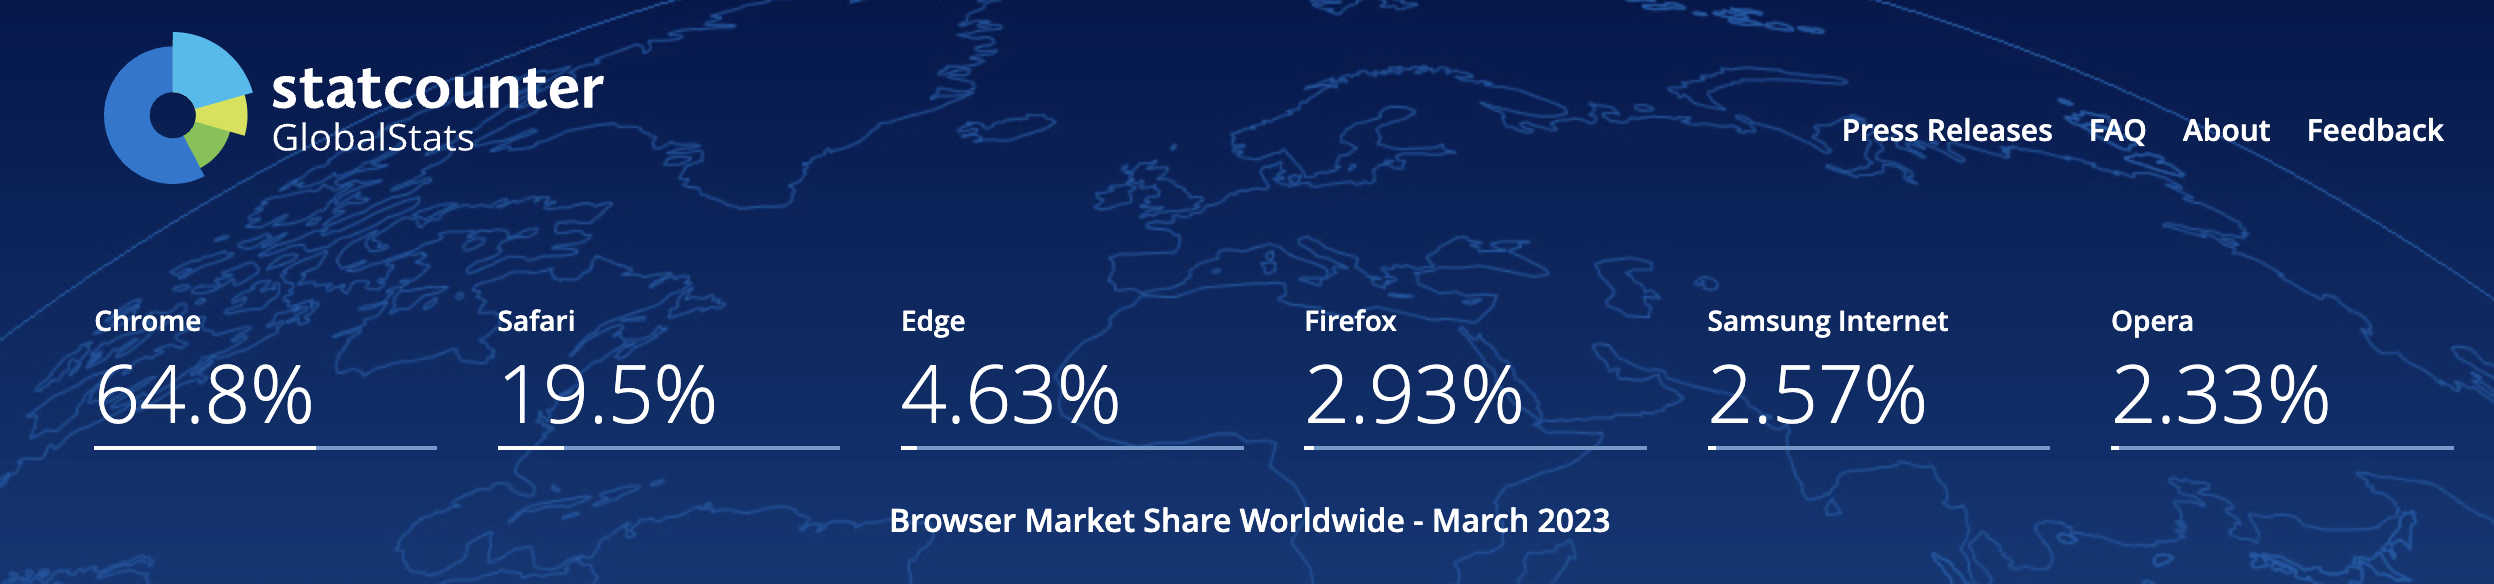 Browser Market Share Worldwide - March 2023